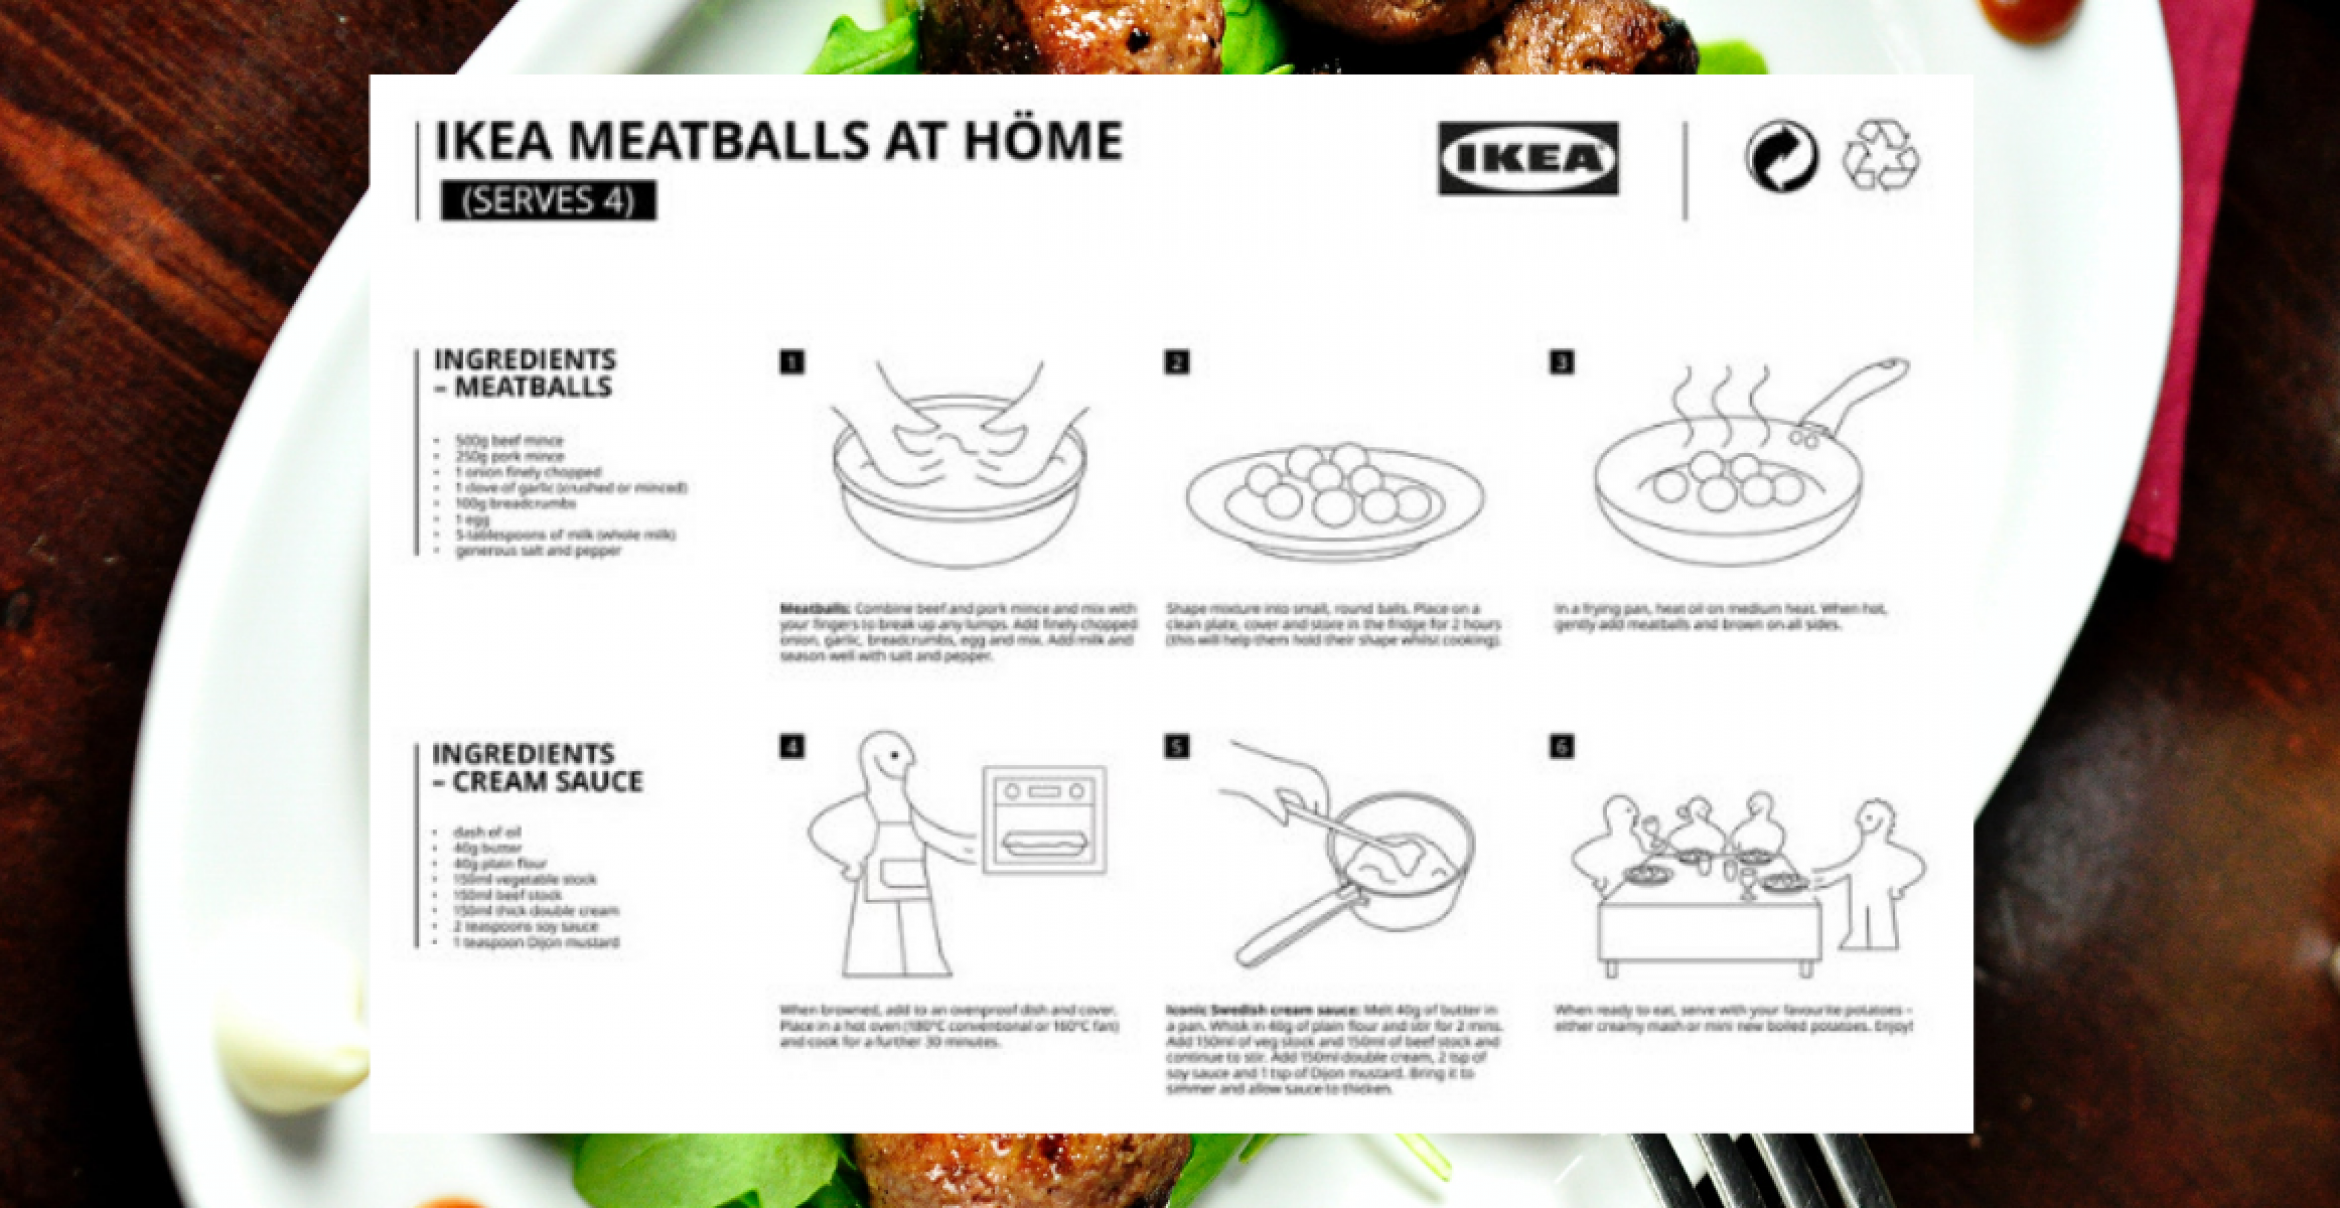 Ikea lüftet das Geheimnis um die berühmte Köttbullar-Rezeptur